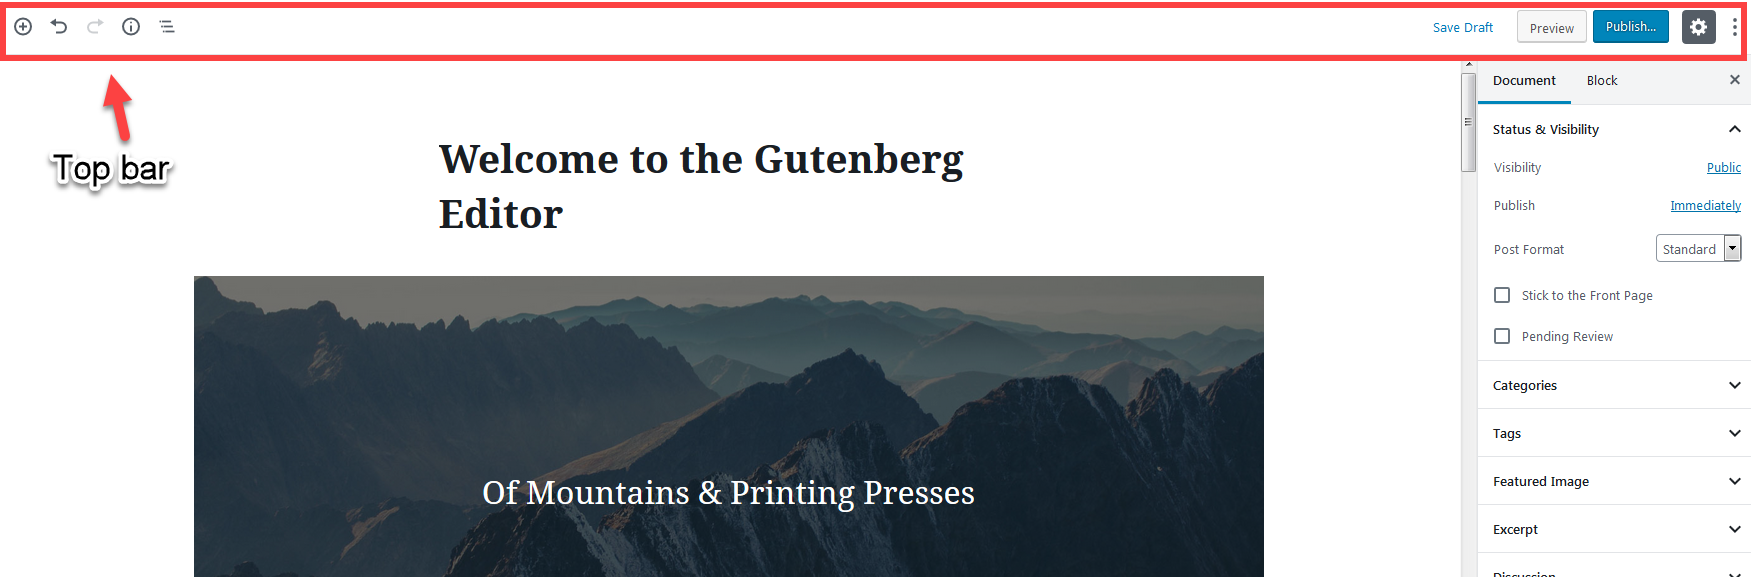 Gutenberg editor in wordpress